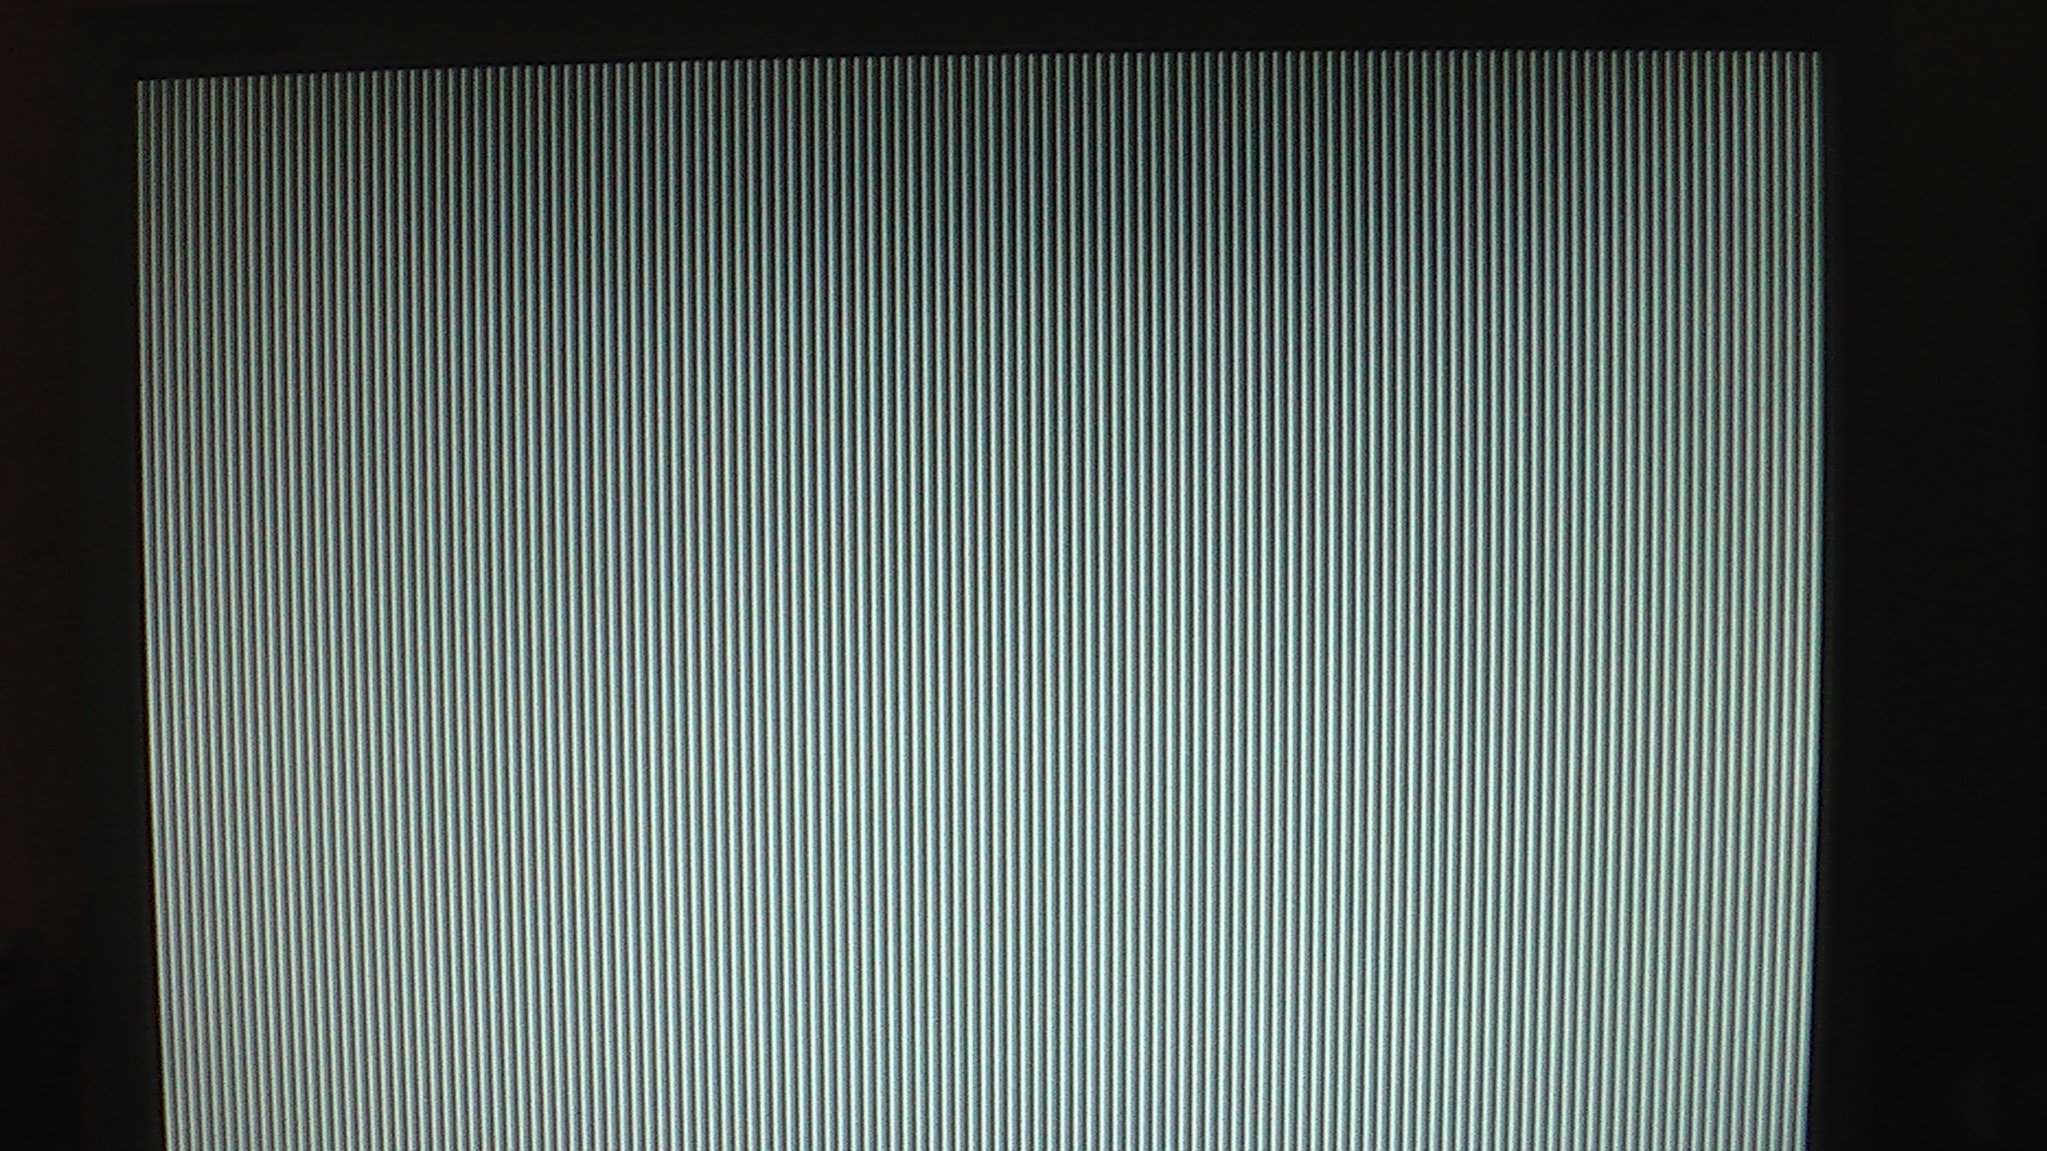 Ютуб серый экран. Серый экран. Серые полосы на мониторе. Серый экран с полосками.